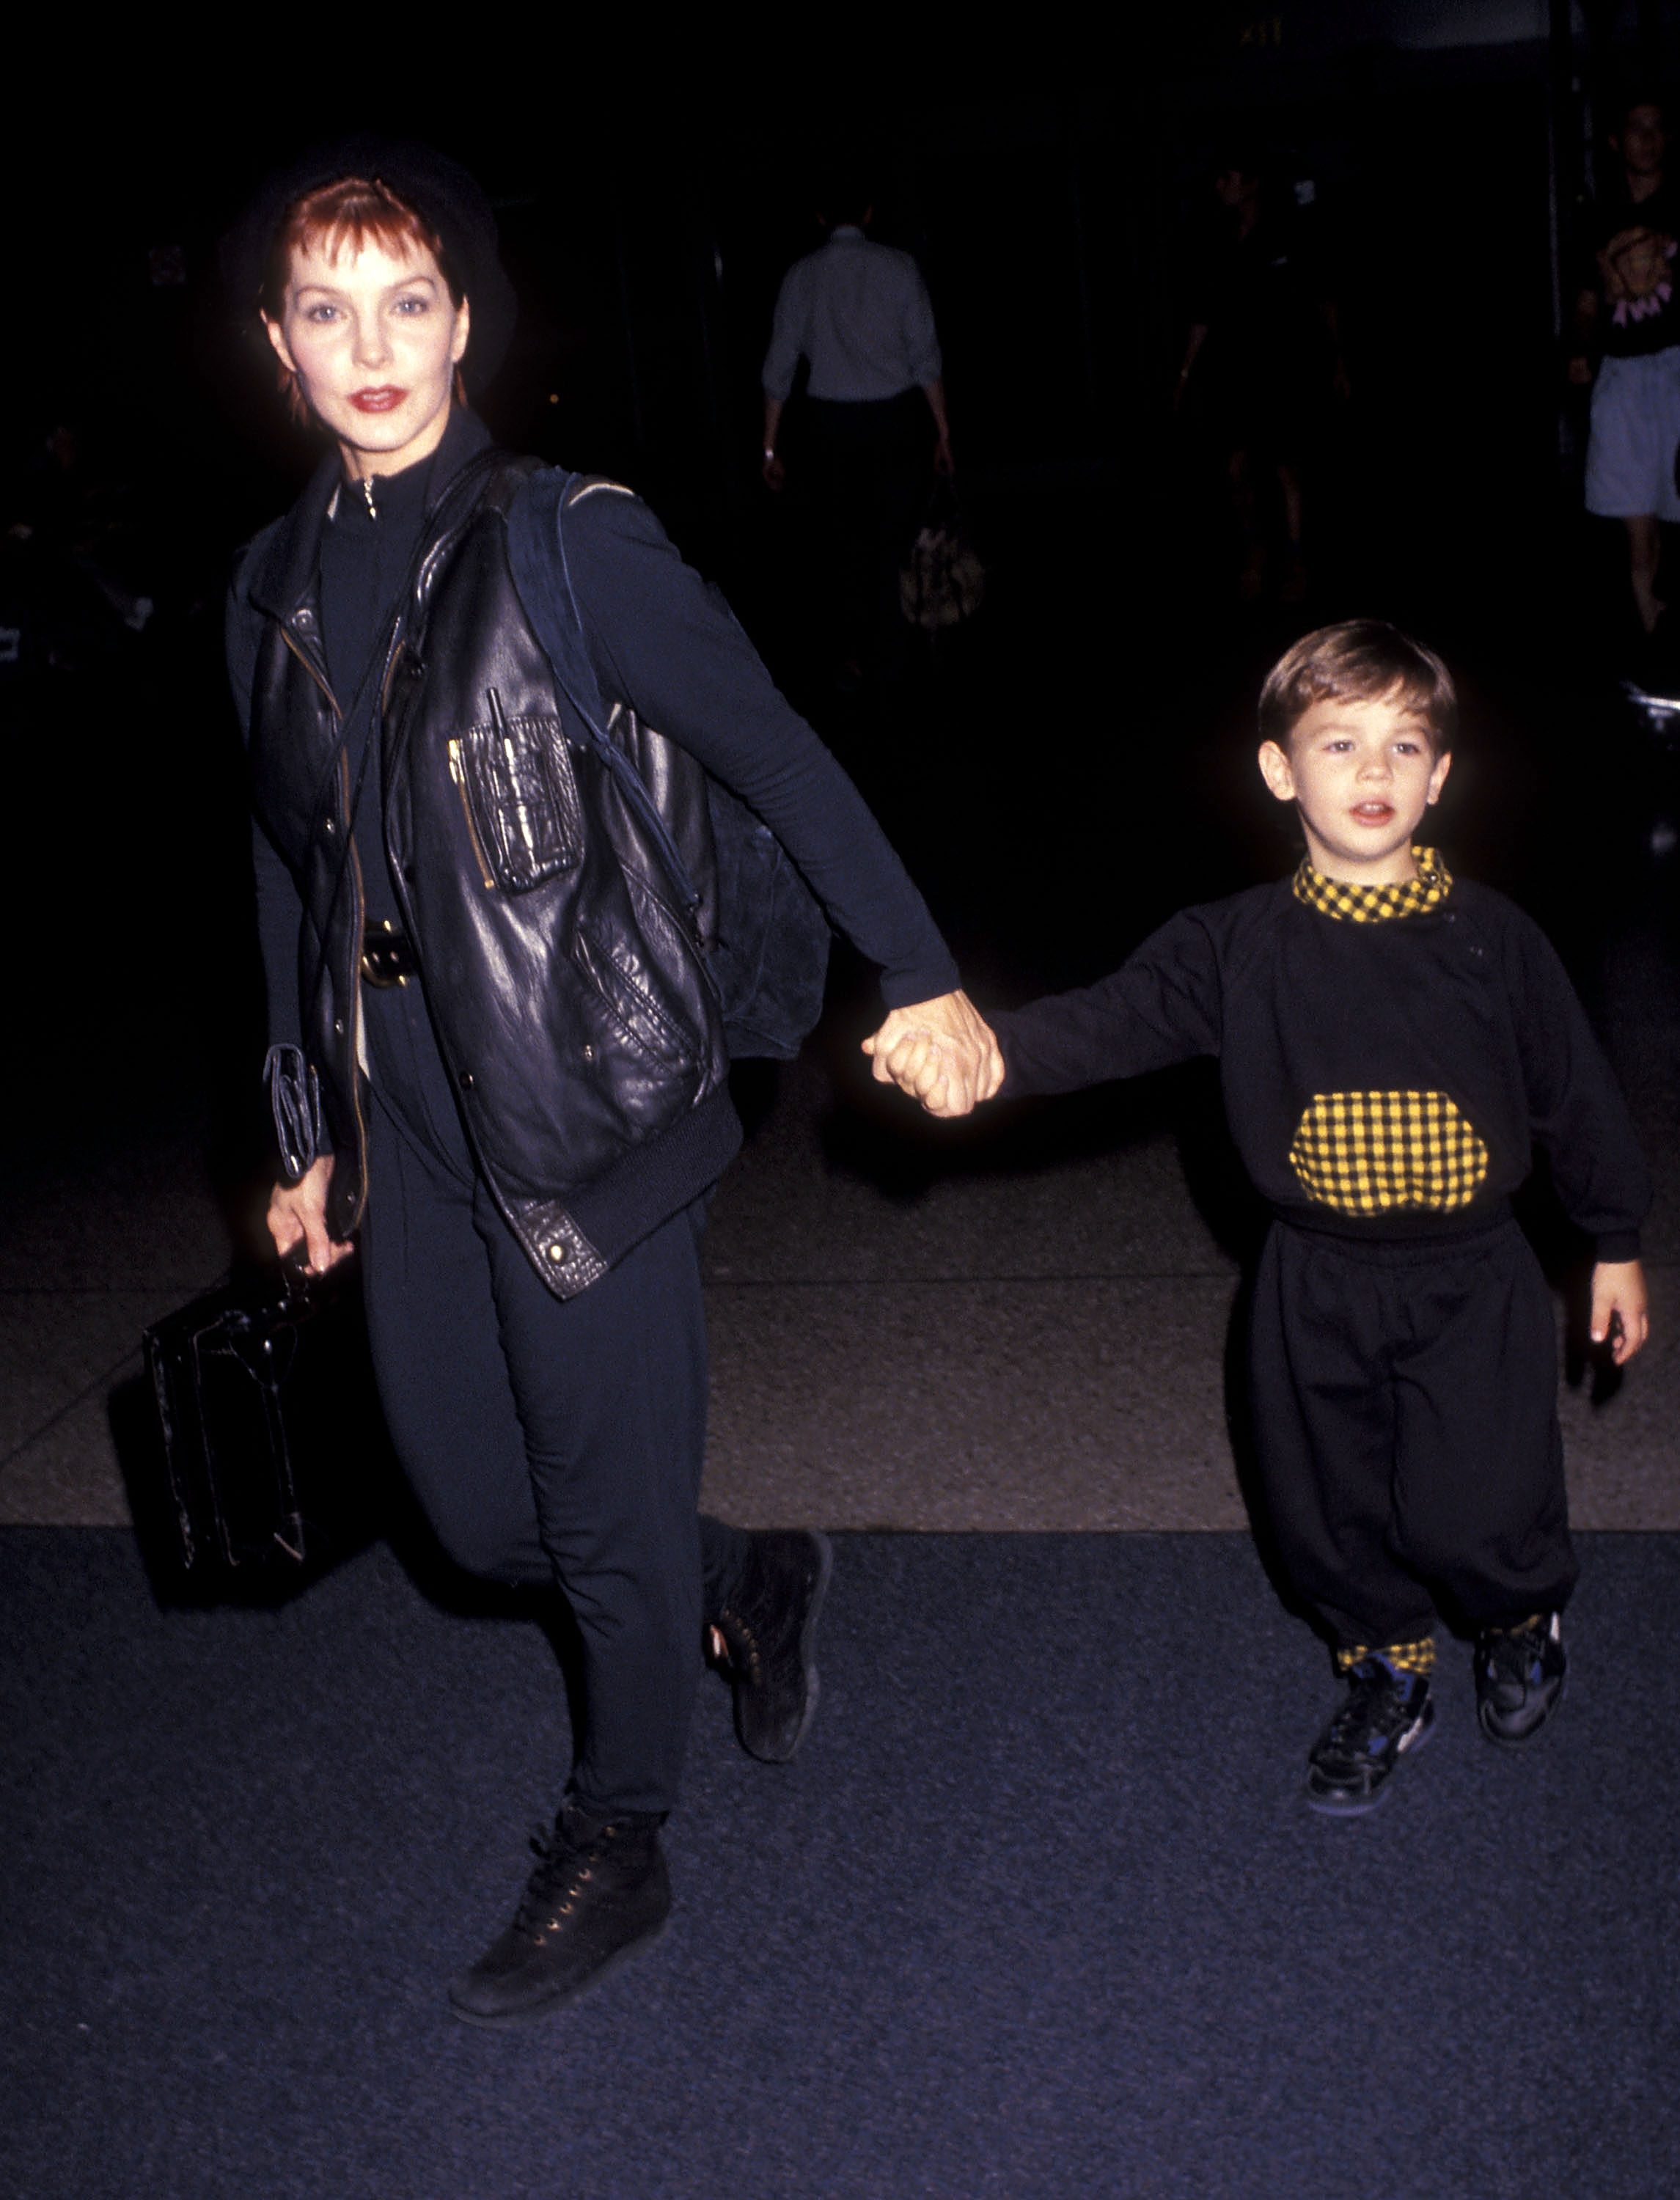 Priscilla Presley and Navarone Garibaldi, 1991 | Source: Getty Images